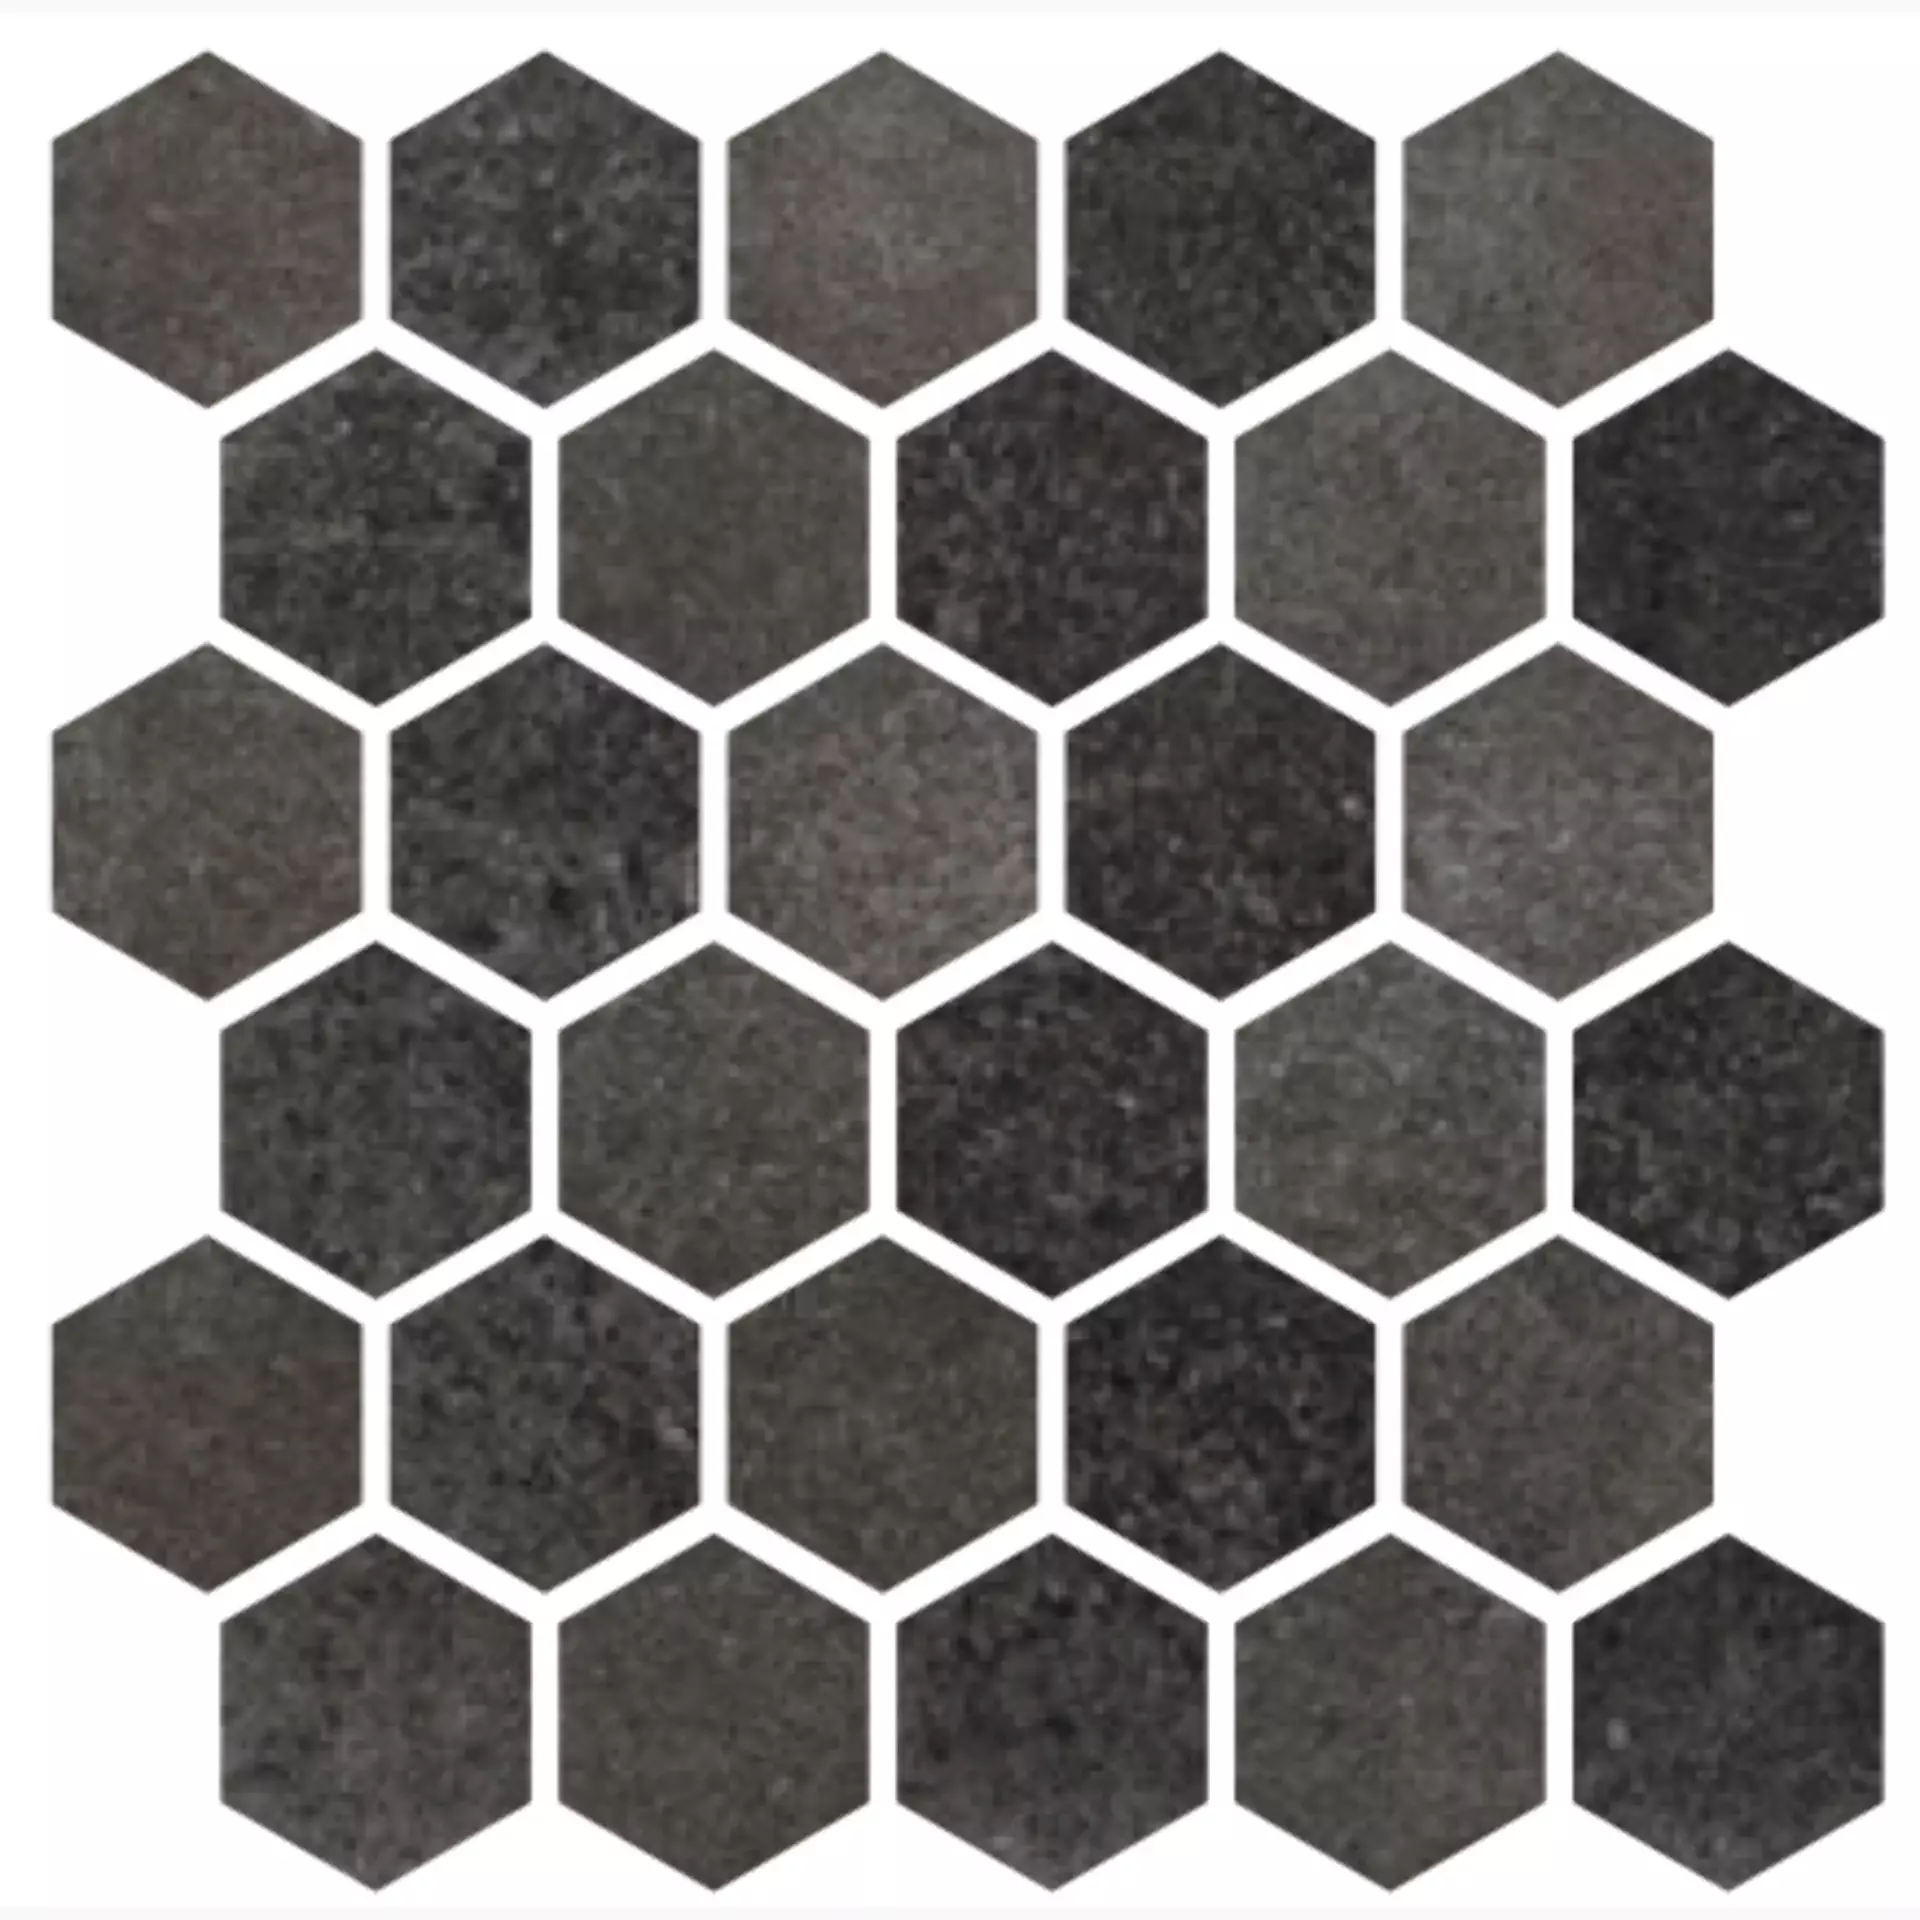 CIR Materia Prima Black Storm Naturale Mosaik Hexagon 1069909 27x27cm